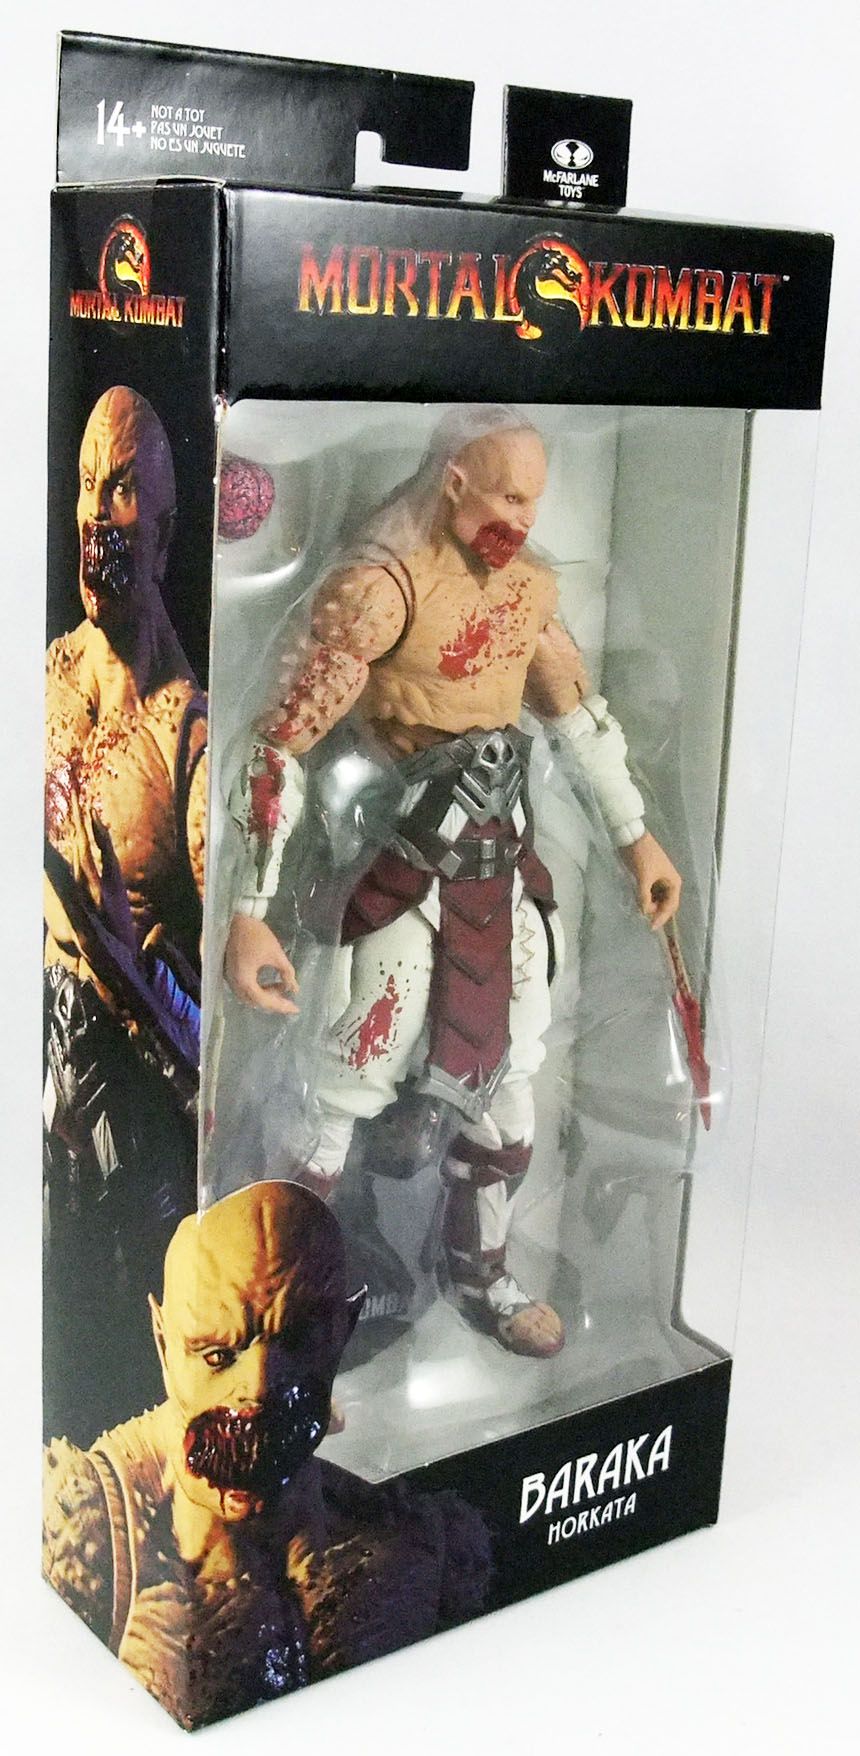 McFarlane Toys Mortal Kombat Baraka Action Figure, Multi